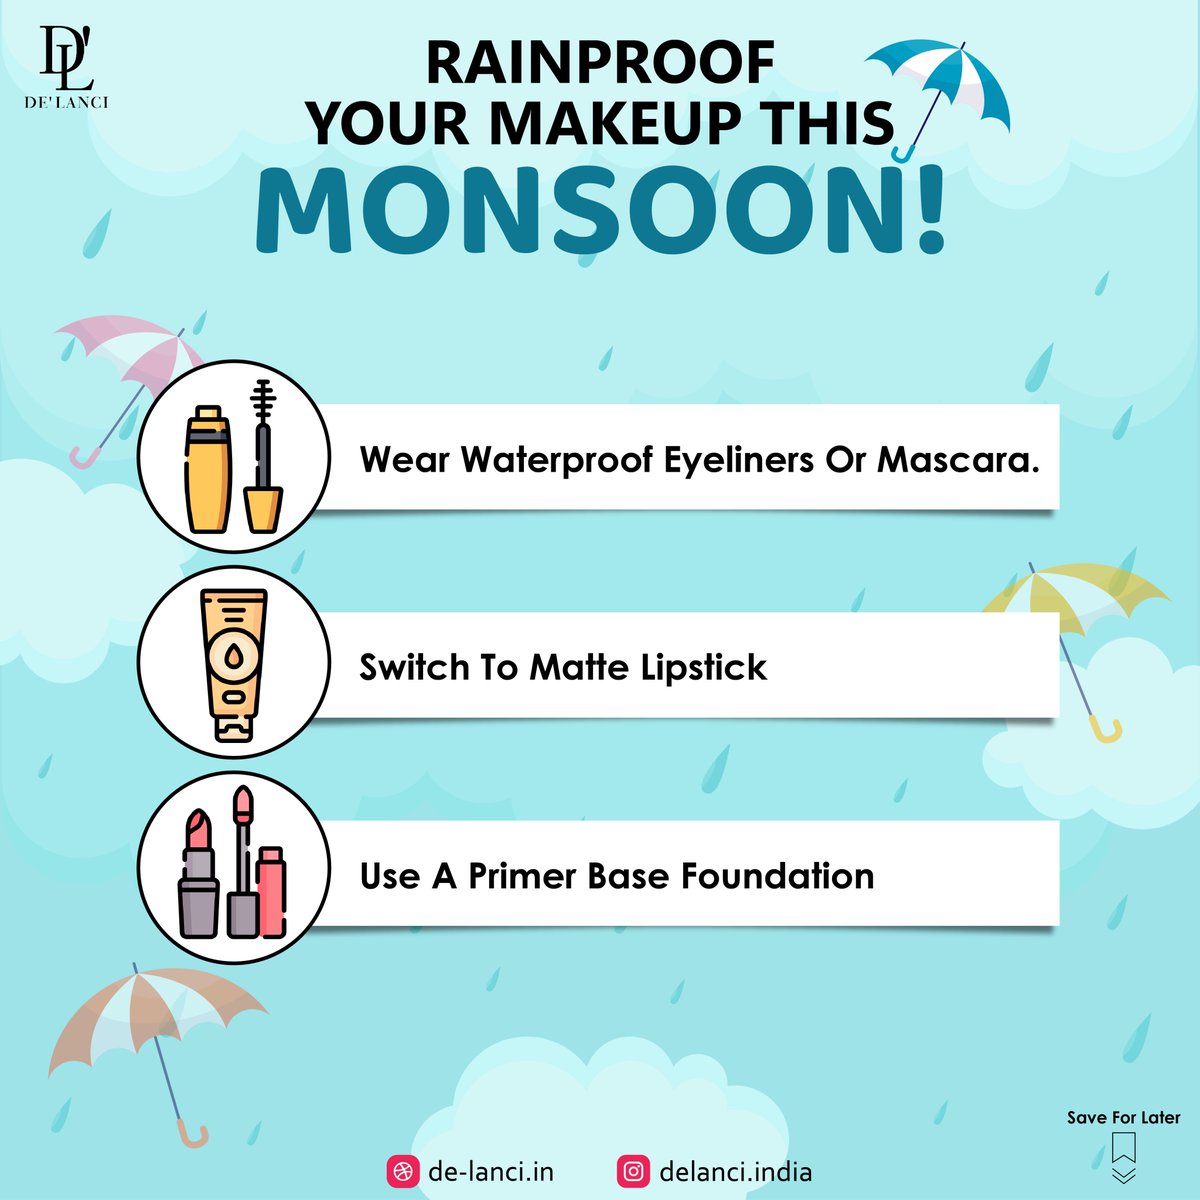 This Monsoon don't Let the rain destroy your makeup 💄🤗

#delanciindia #delanci #delancicosmetics #delancisale #LongLastingMakeup #VeganMakeup #eyeshadowlook #eyeshadowpalettes #concealerpalette #concealerhacks